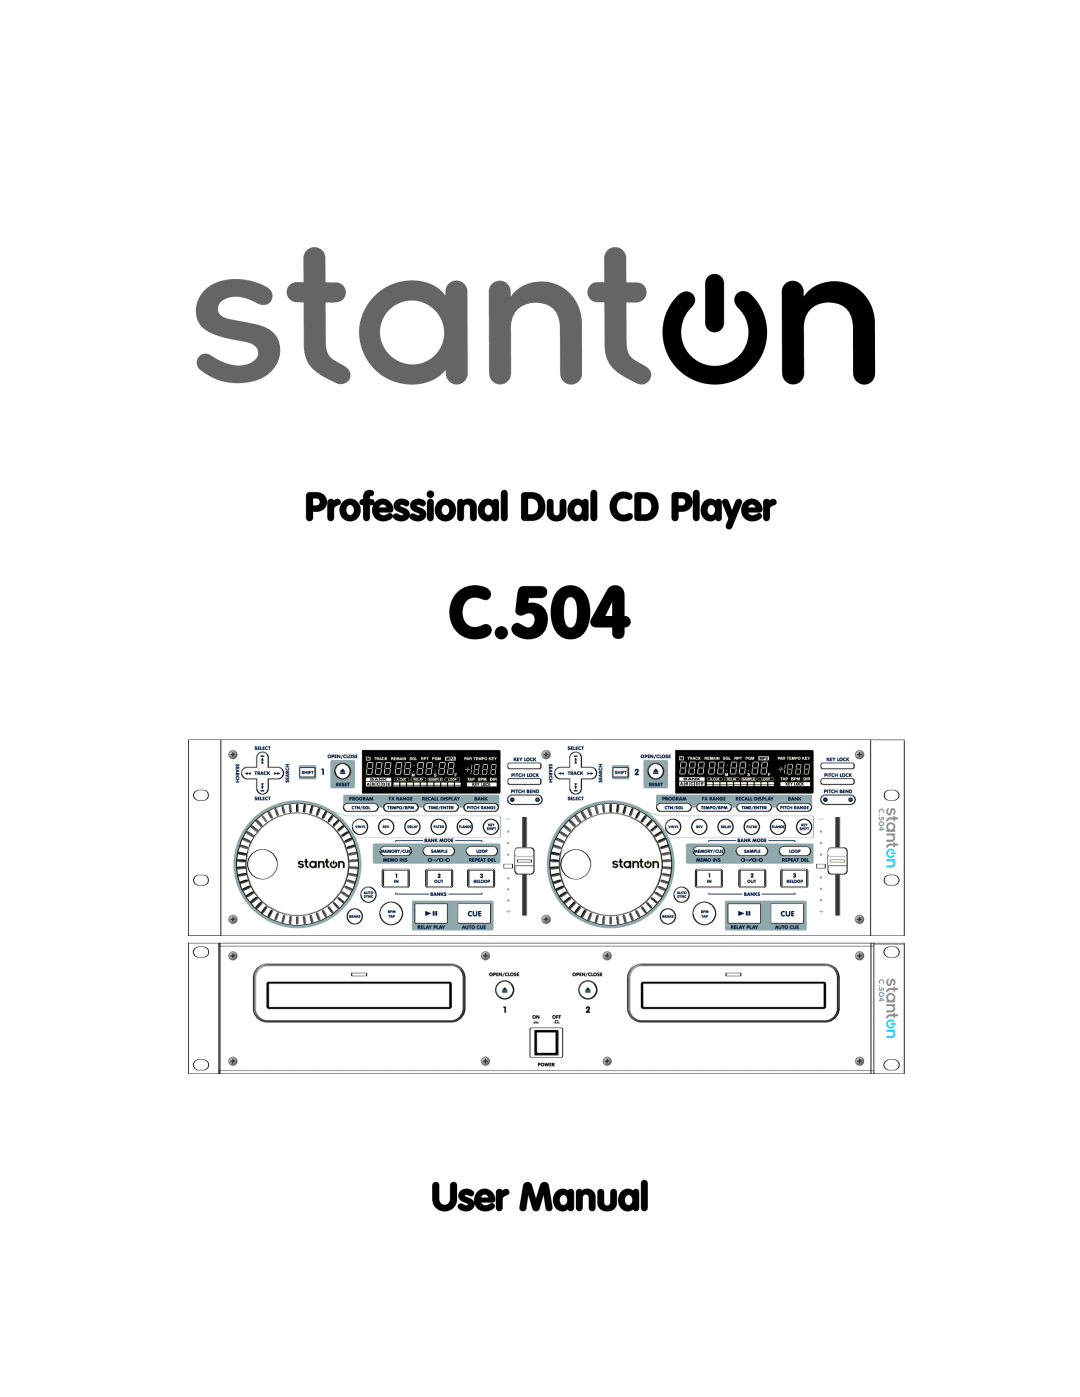 Stanton C.504 manual Professional Dual CD Player 